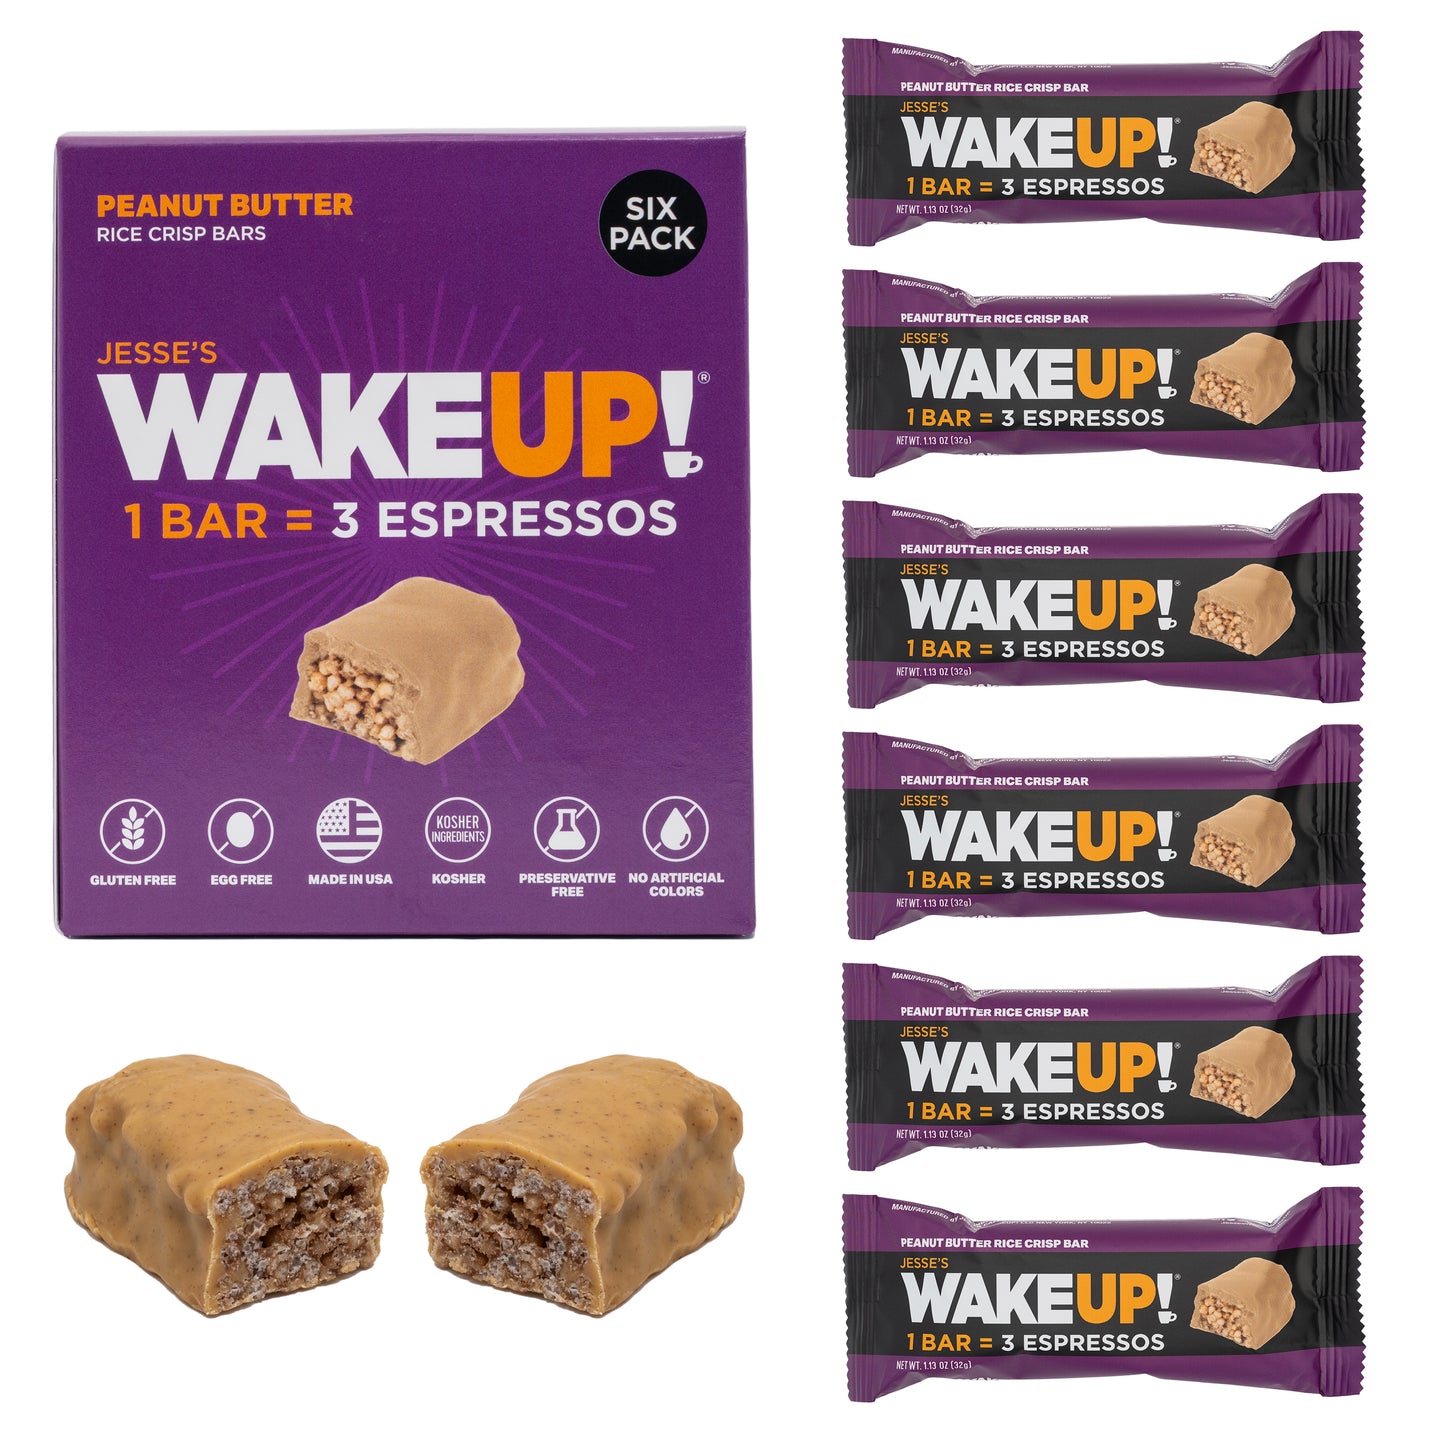 WakeUP! Peanut Butter Bars (1 Bar = 3 Espressos)